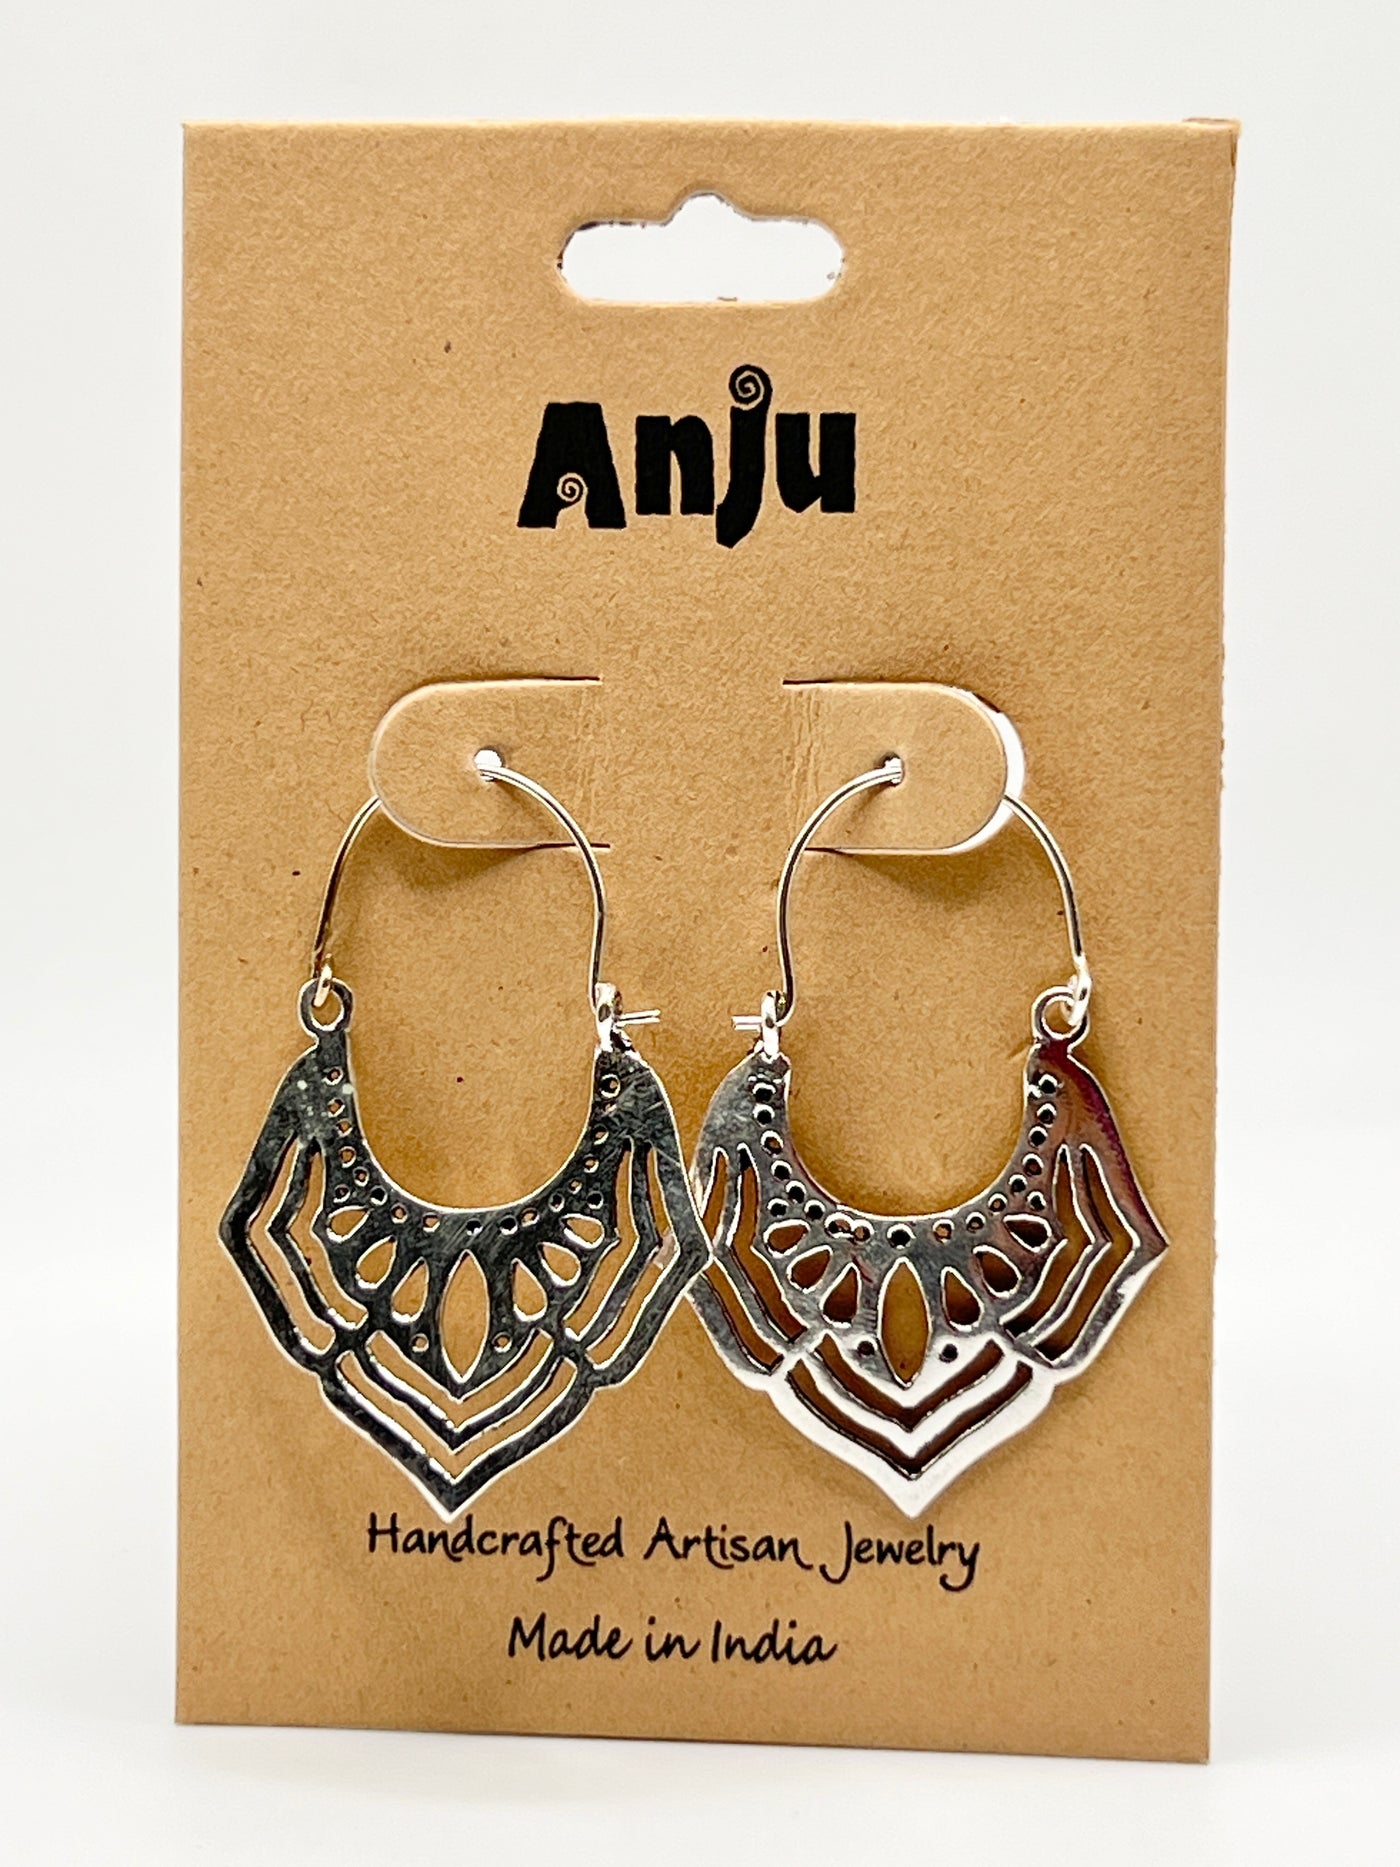 The Tanvi Collection by Anju